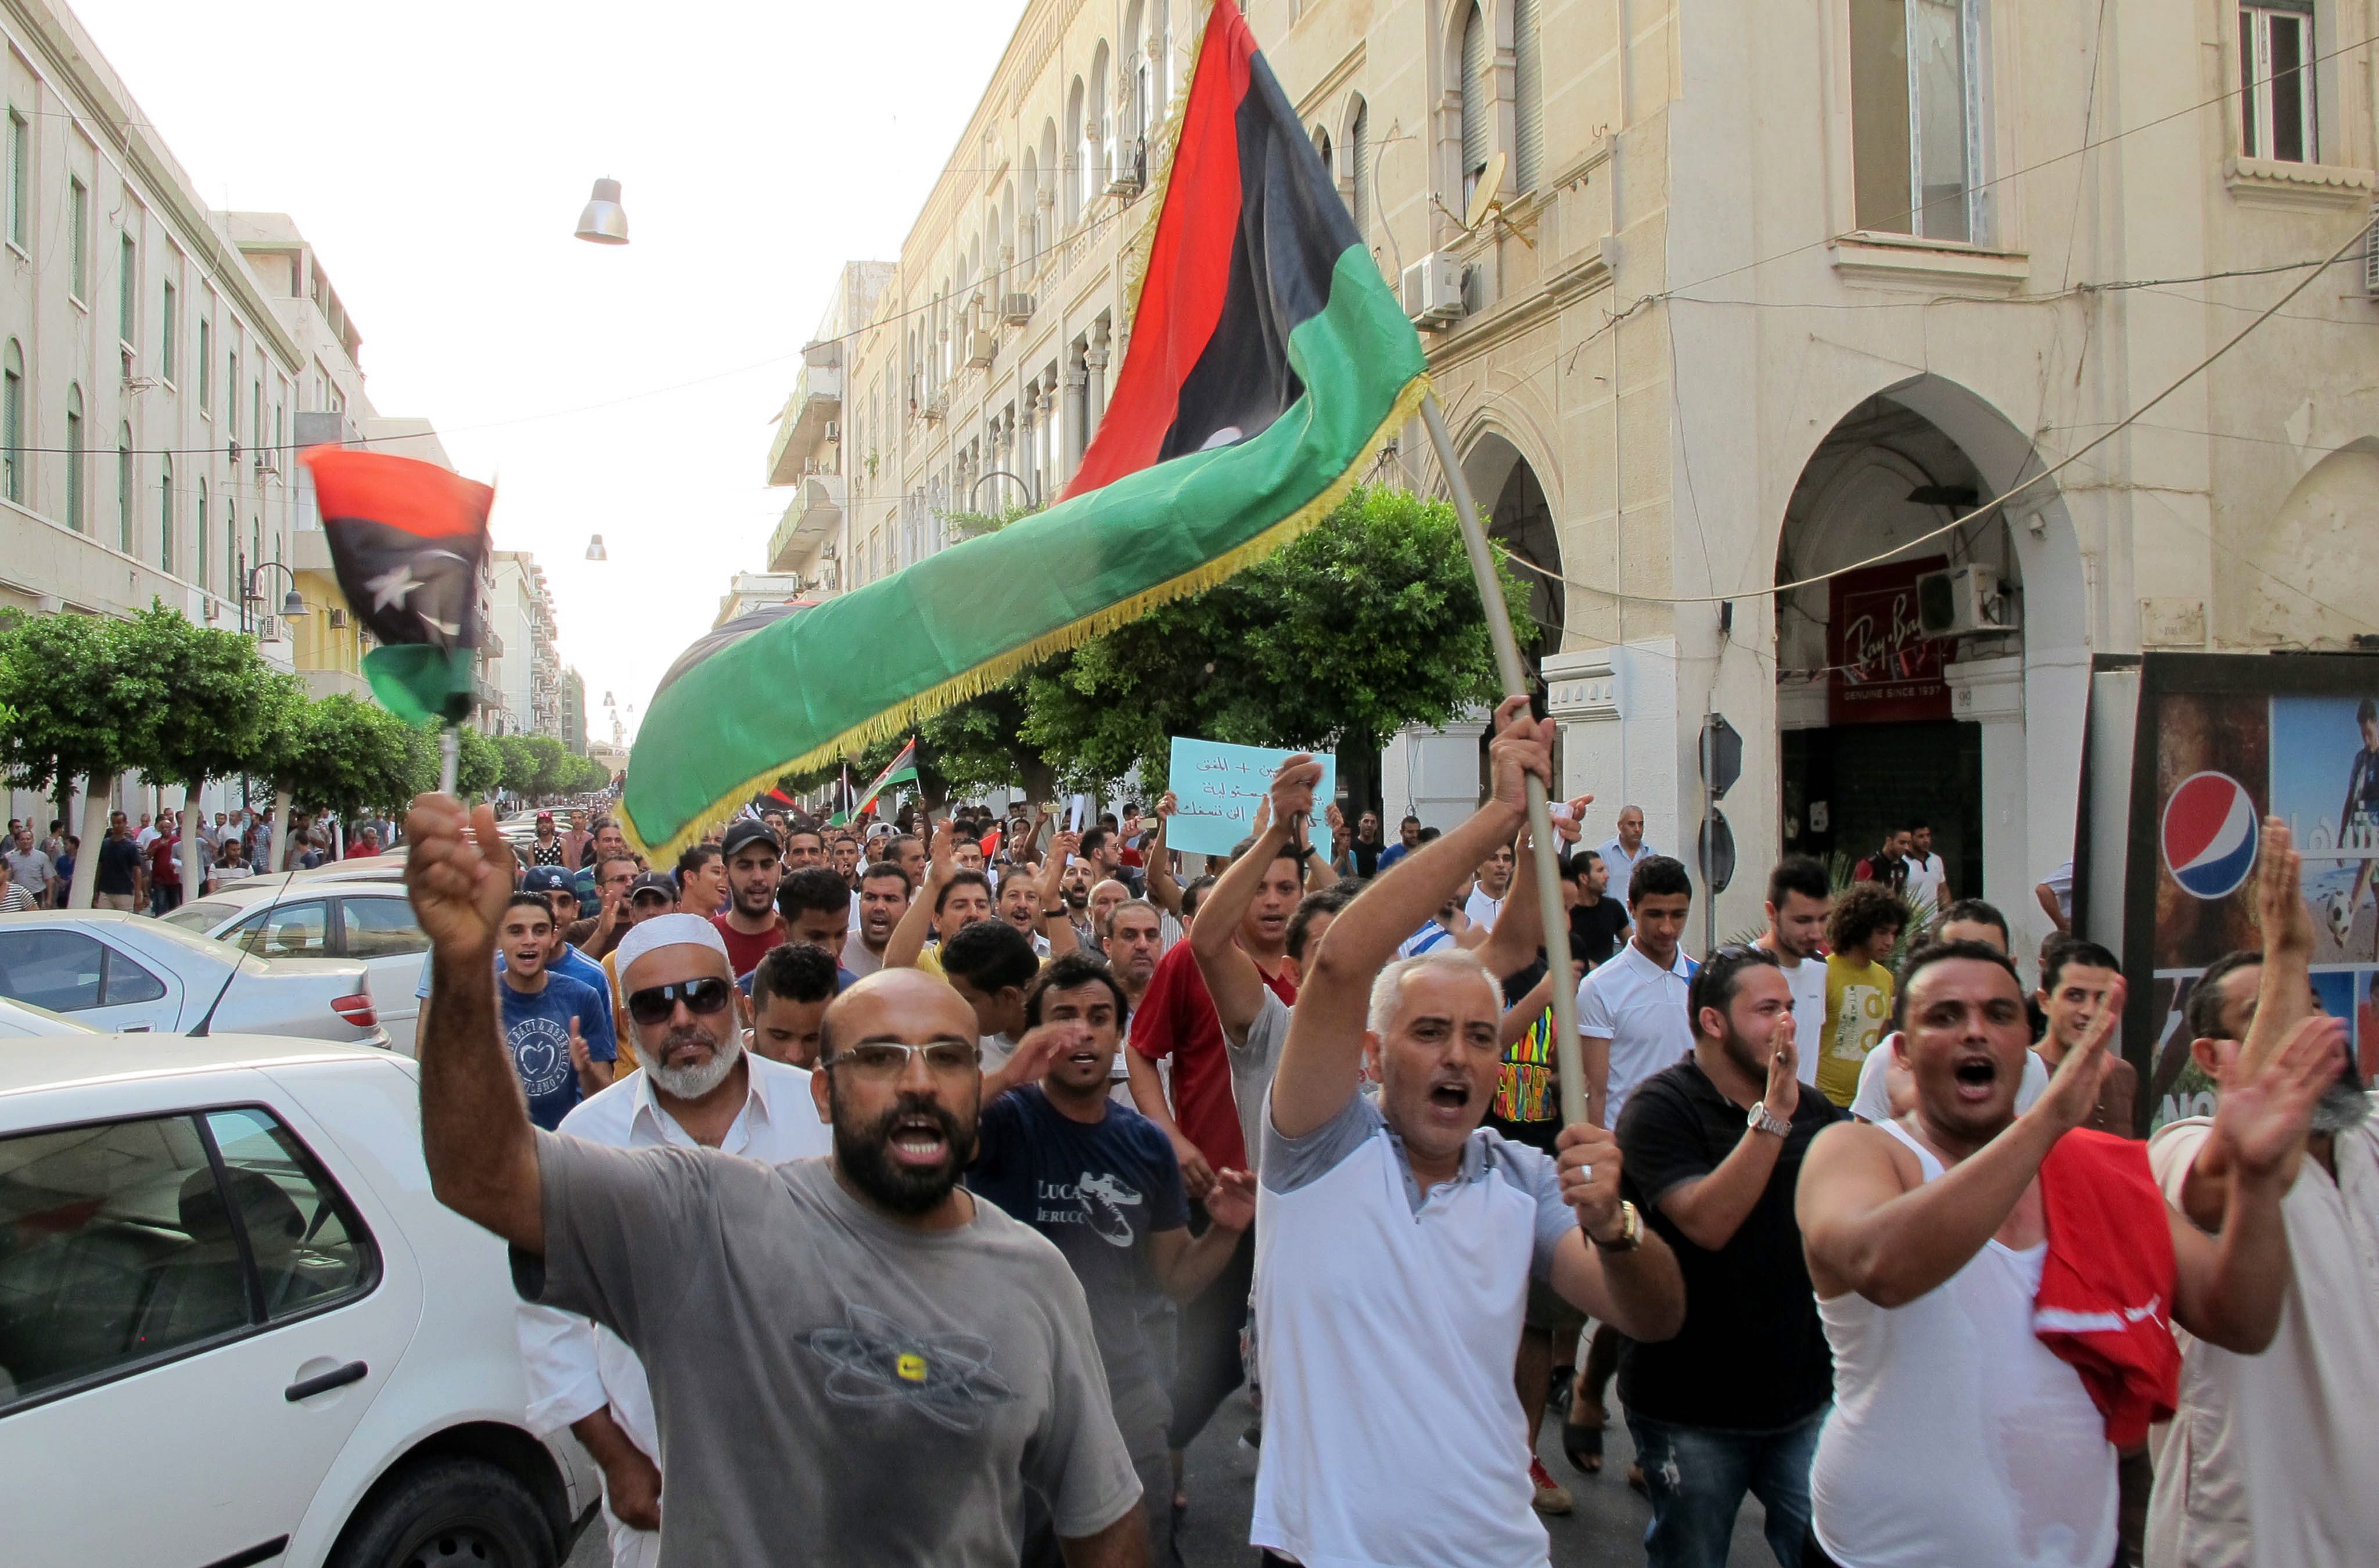 To Λονδίνο καλεί σε στήριξη της κυβέρνησης της Λιβύης